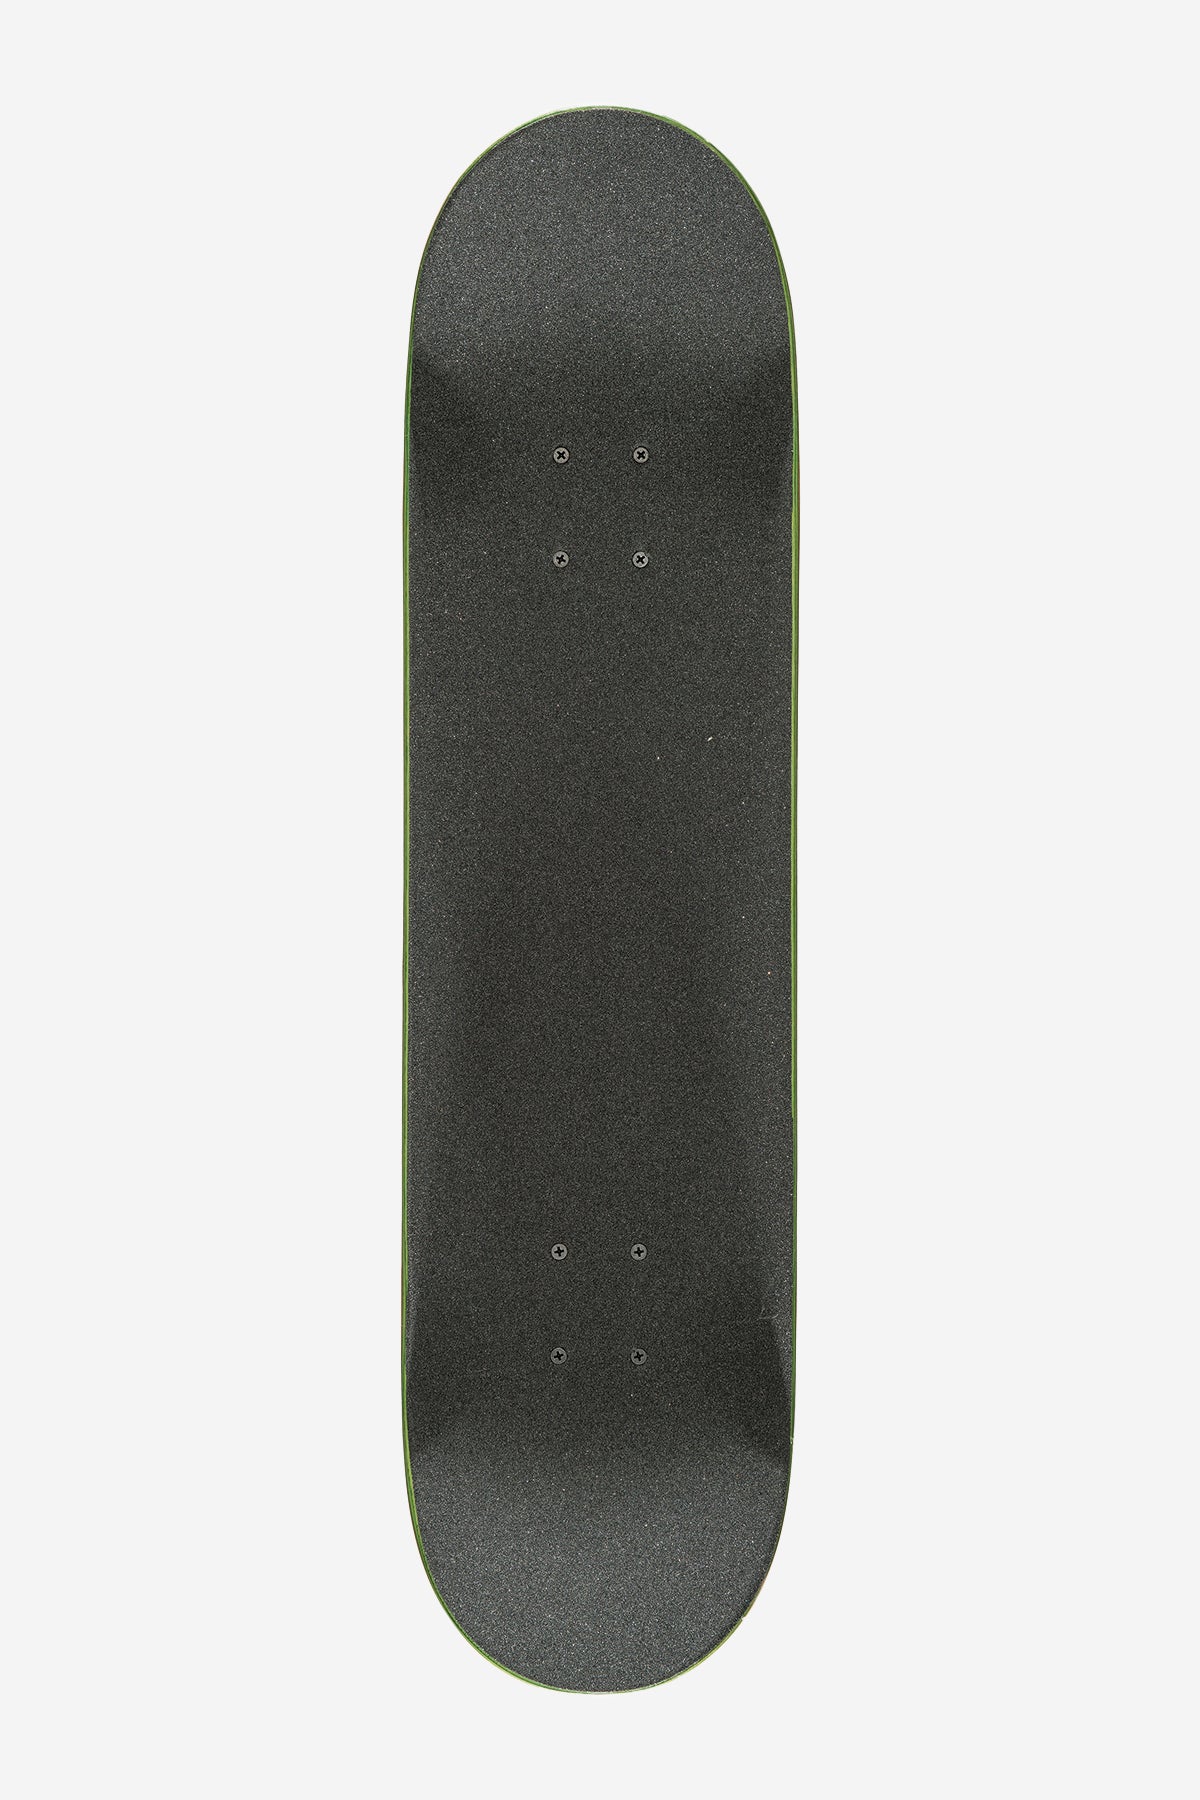 Globe - G1 Palm Off - Black - 8.0" Complete Skateboard